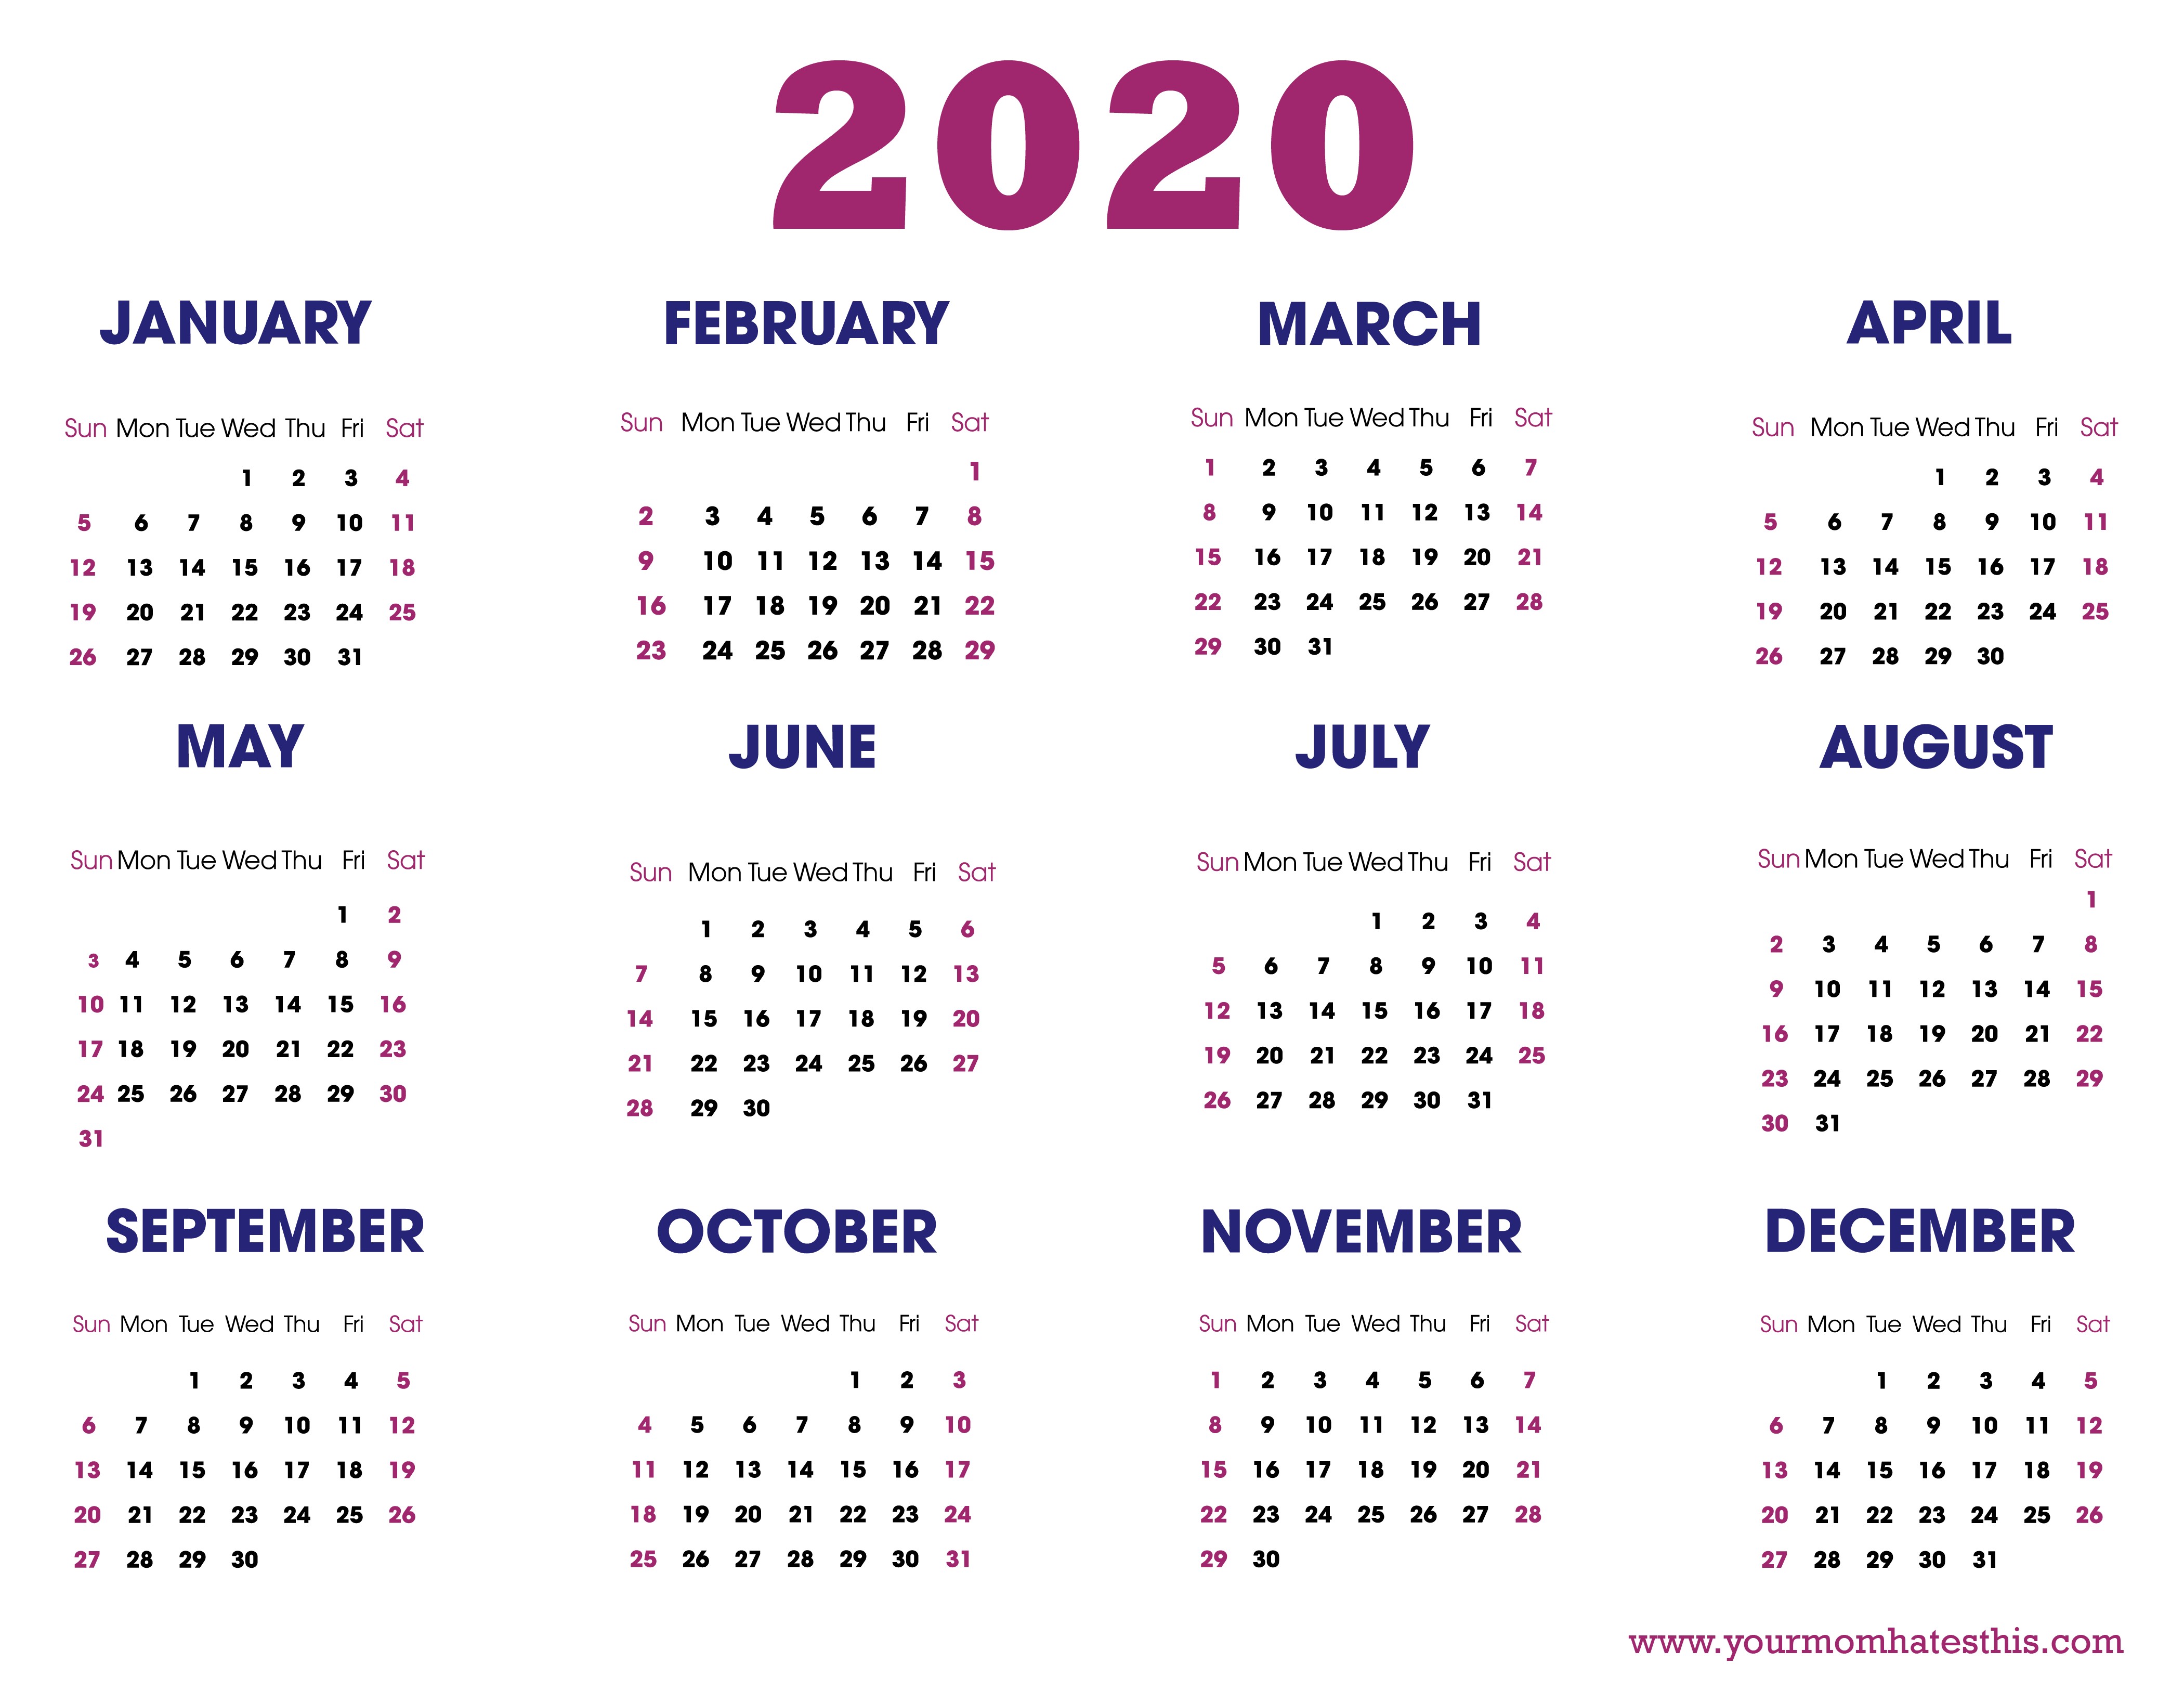 2020 calendar